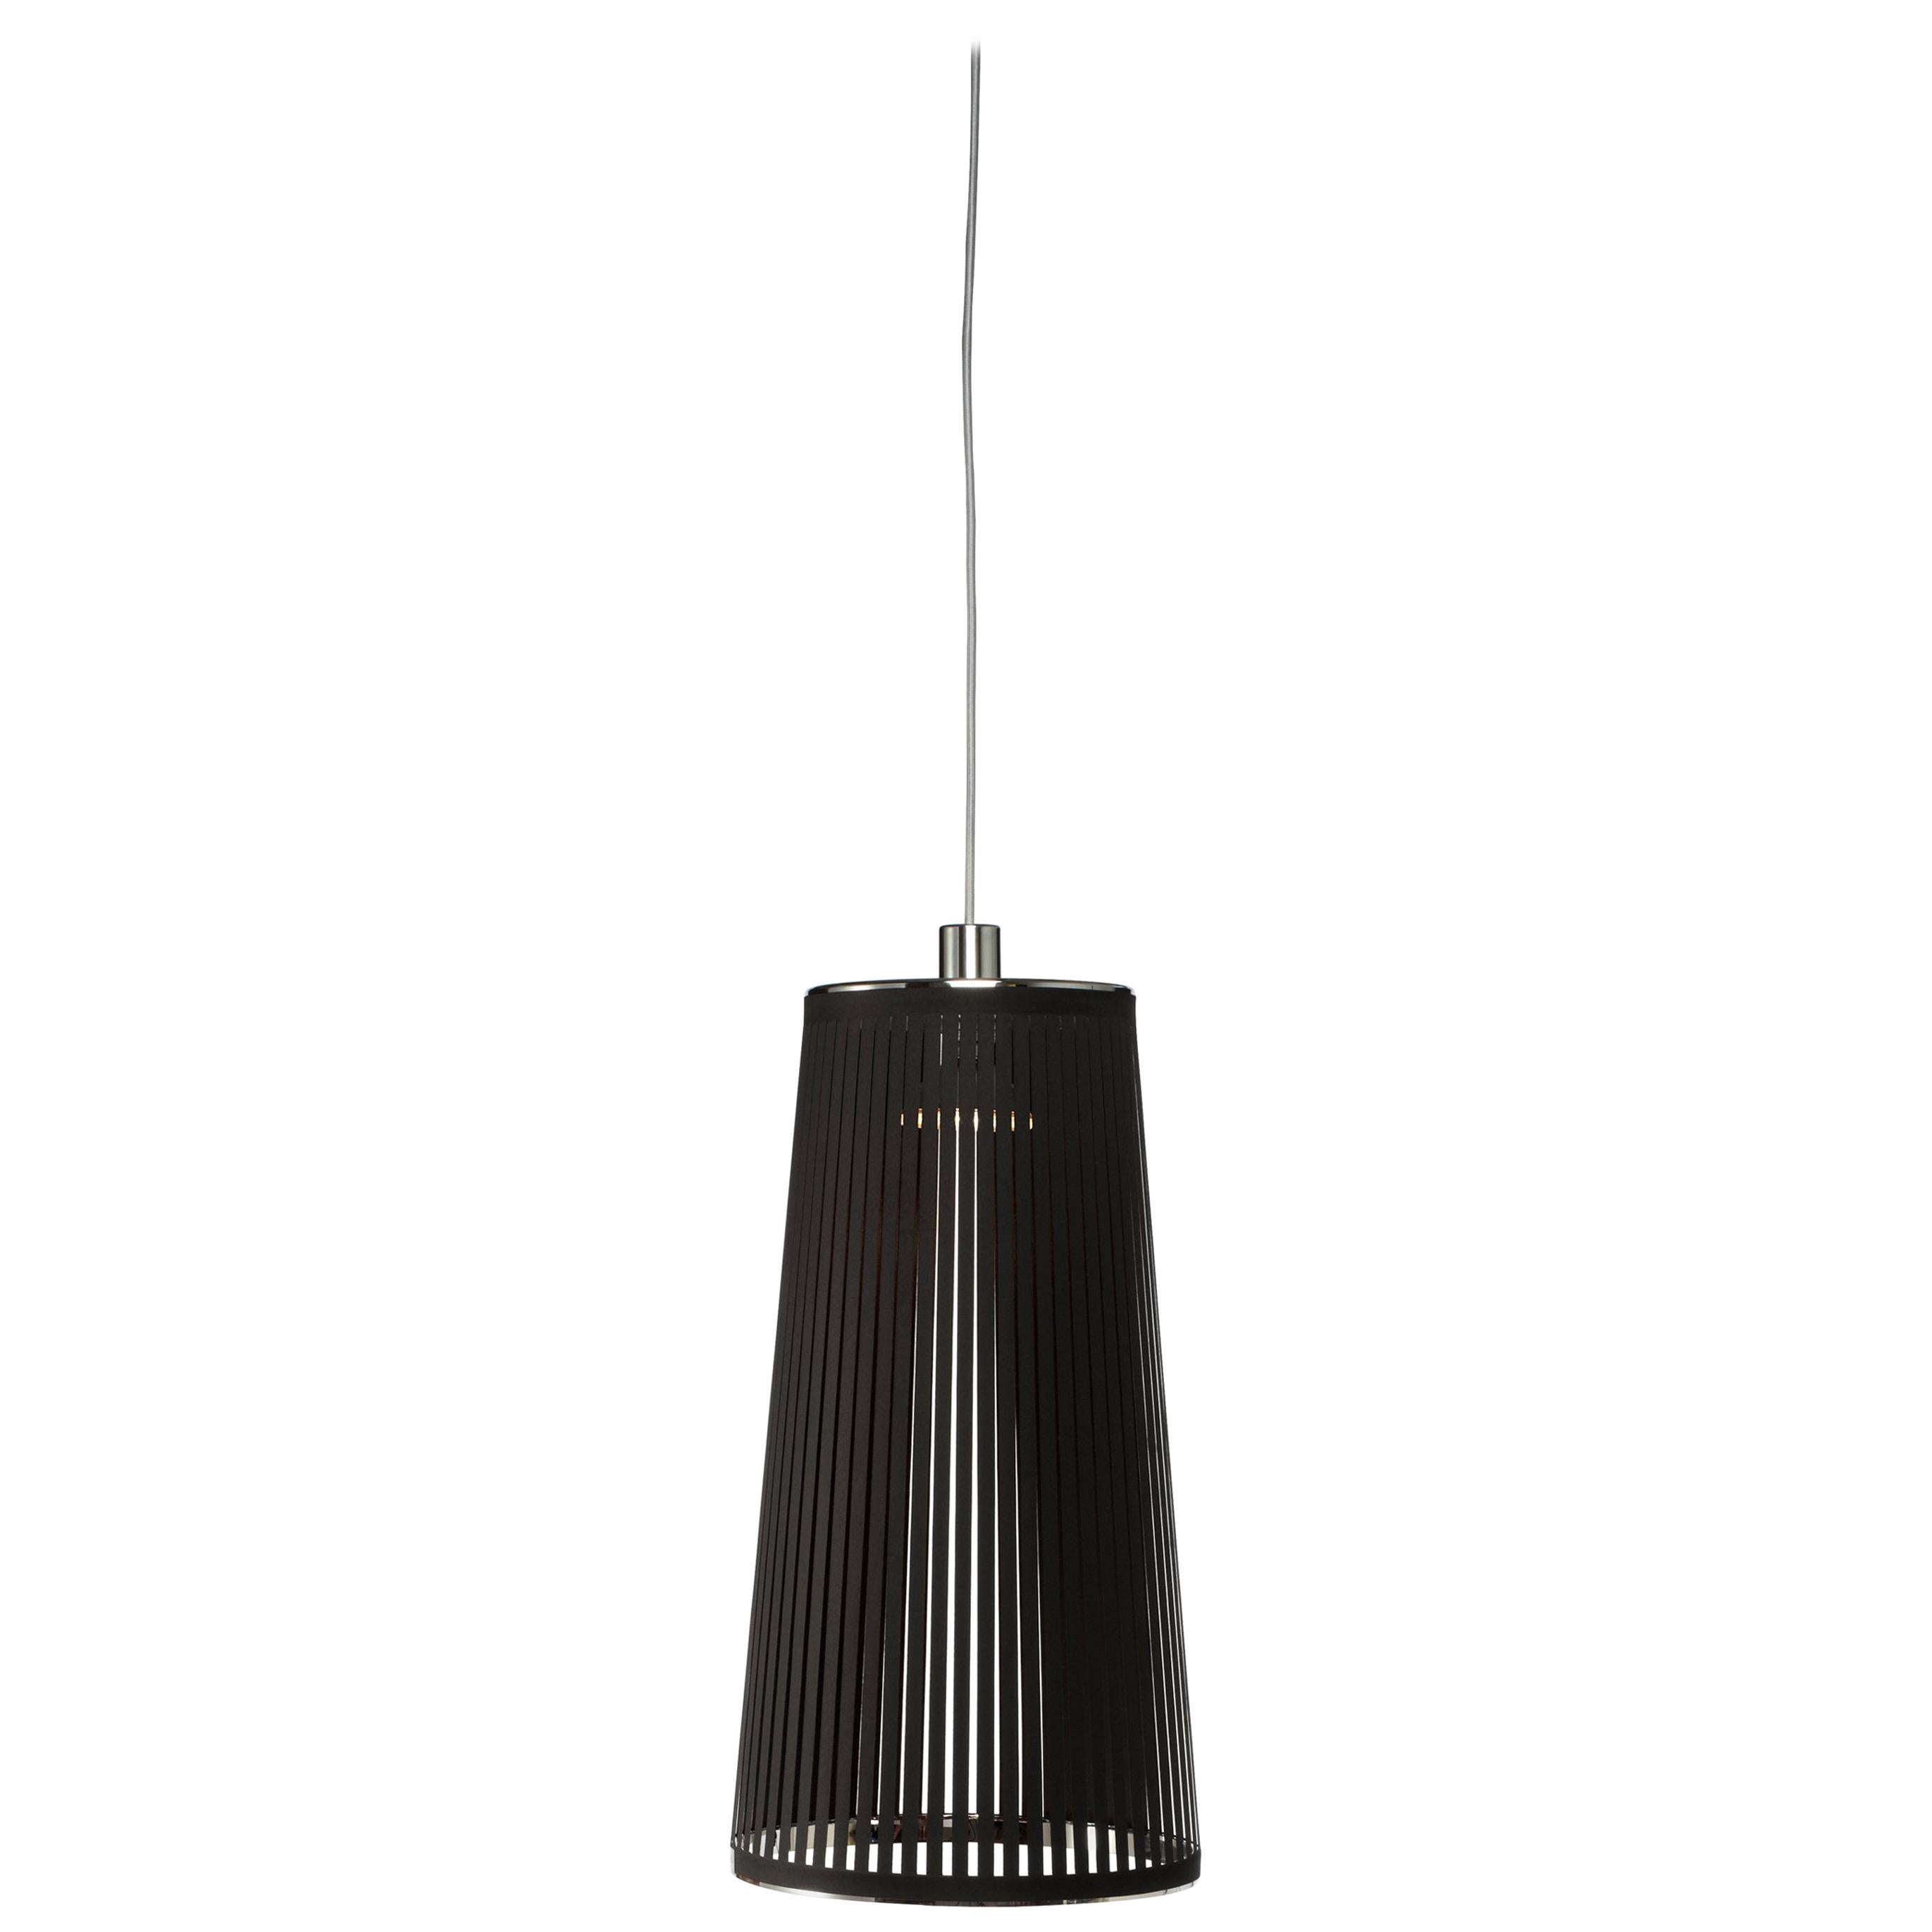 Solis 24 Pendant Light in Black by Pablo Designs